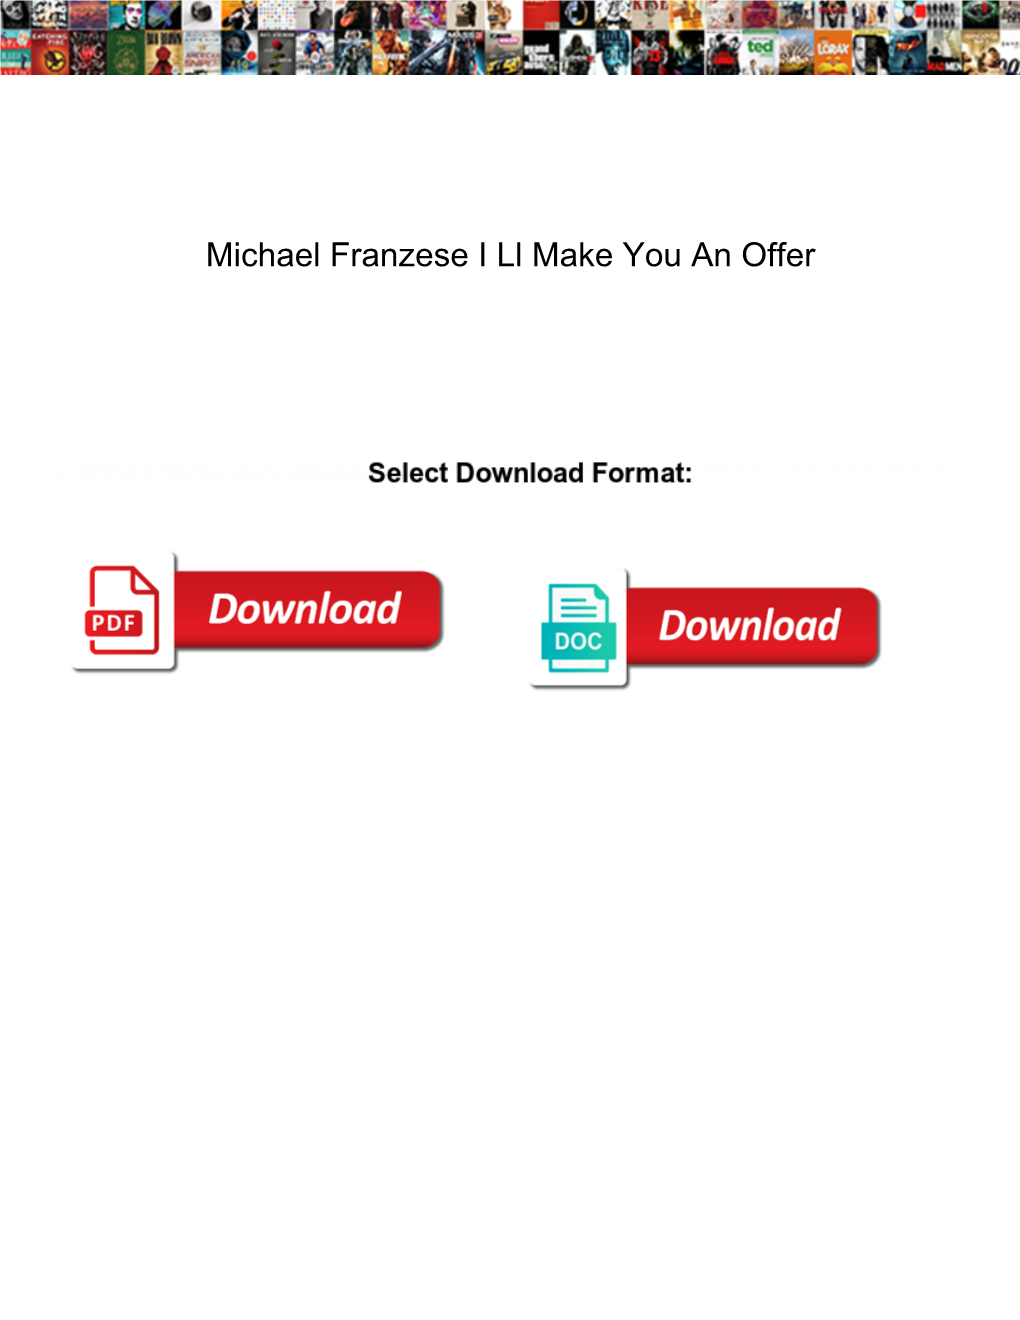 Michael Franzese I Ll Make You an Offer